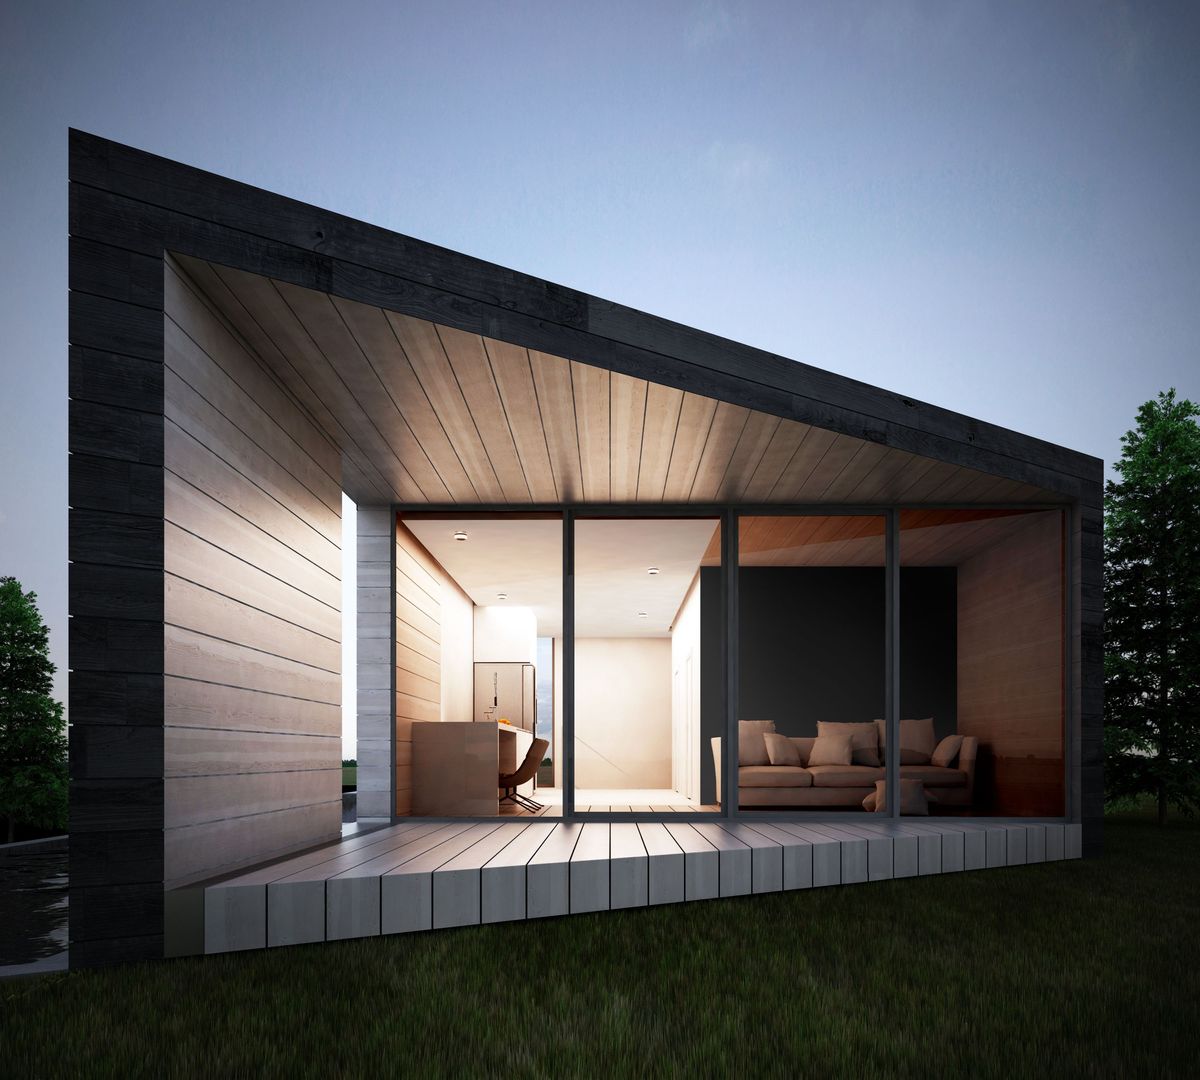 Проект дома в стиле минимализм / Minimalism house, Way-Project Architecture & Design Way-Project Architecture & Design Minimalistische Häuser